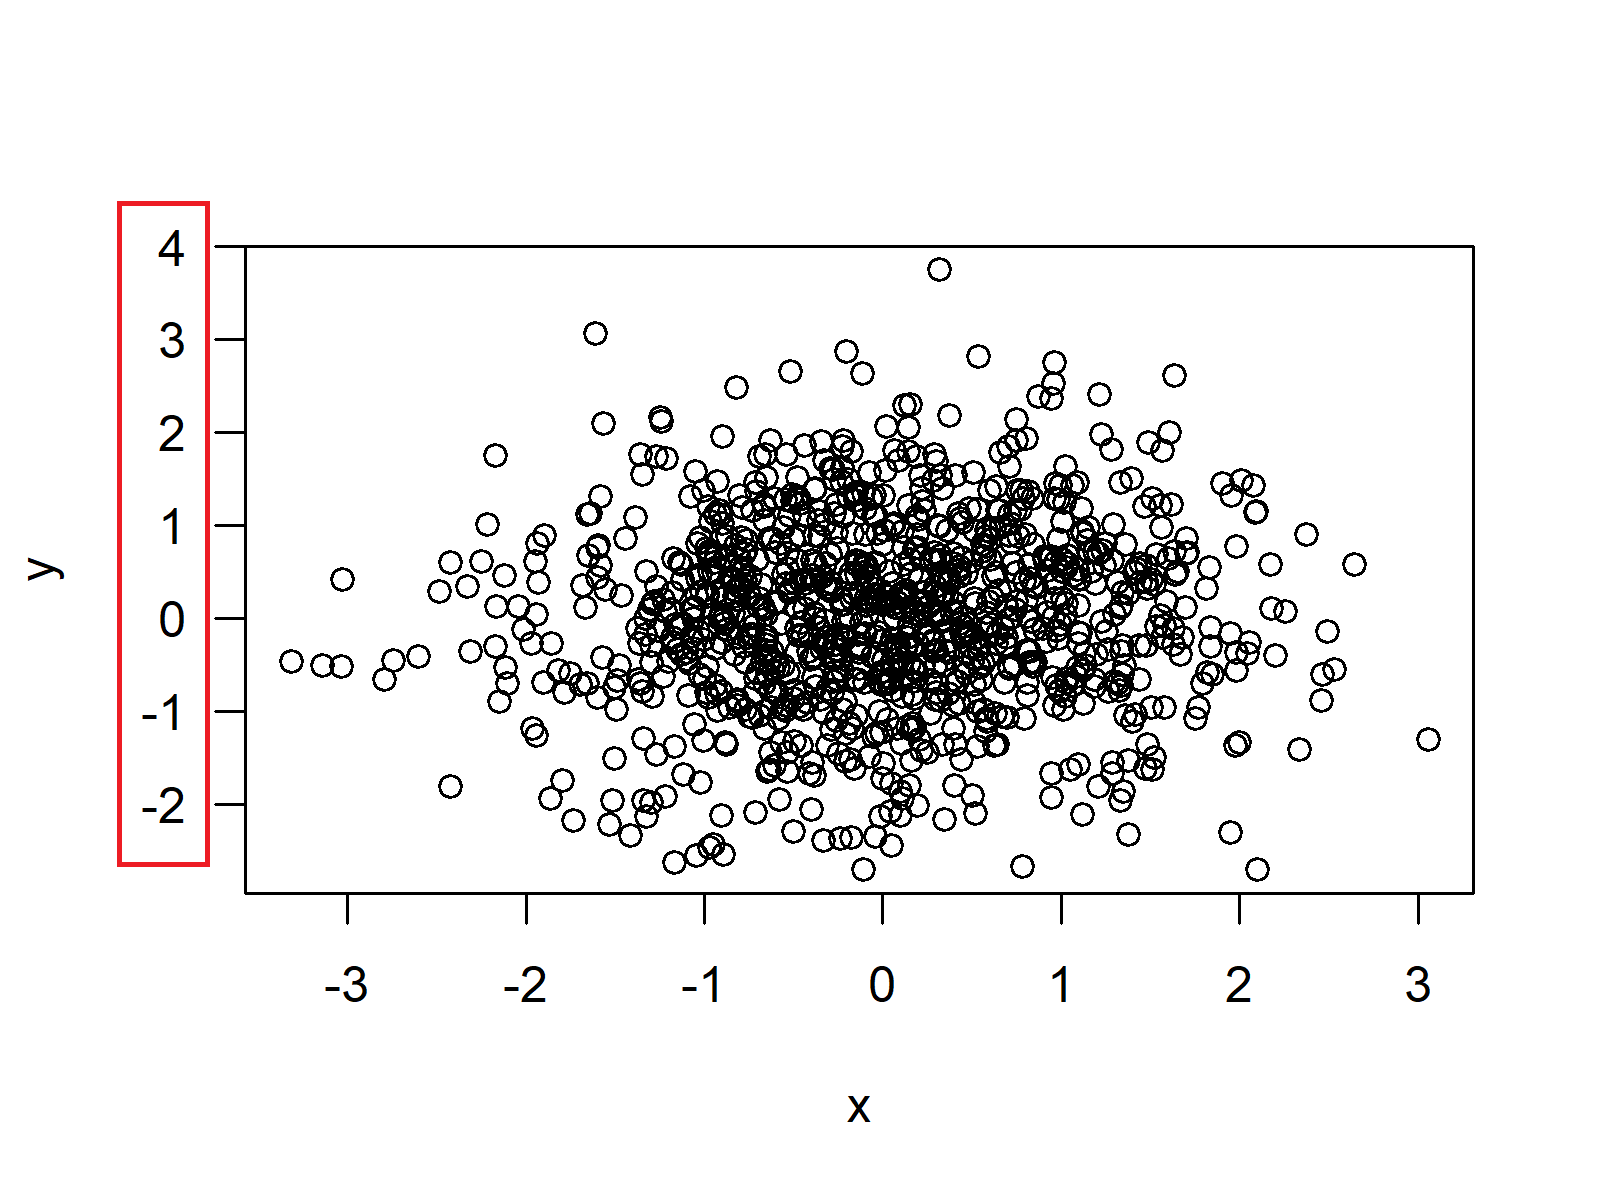 horizontal base r plot axis labels